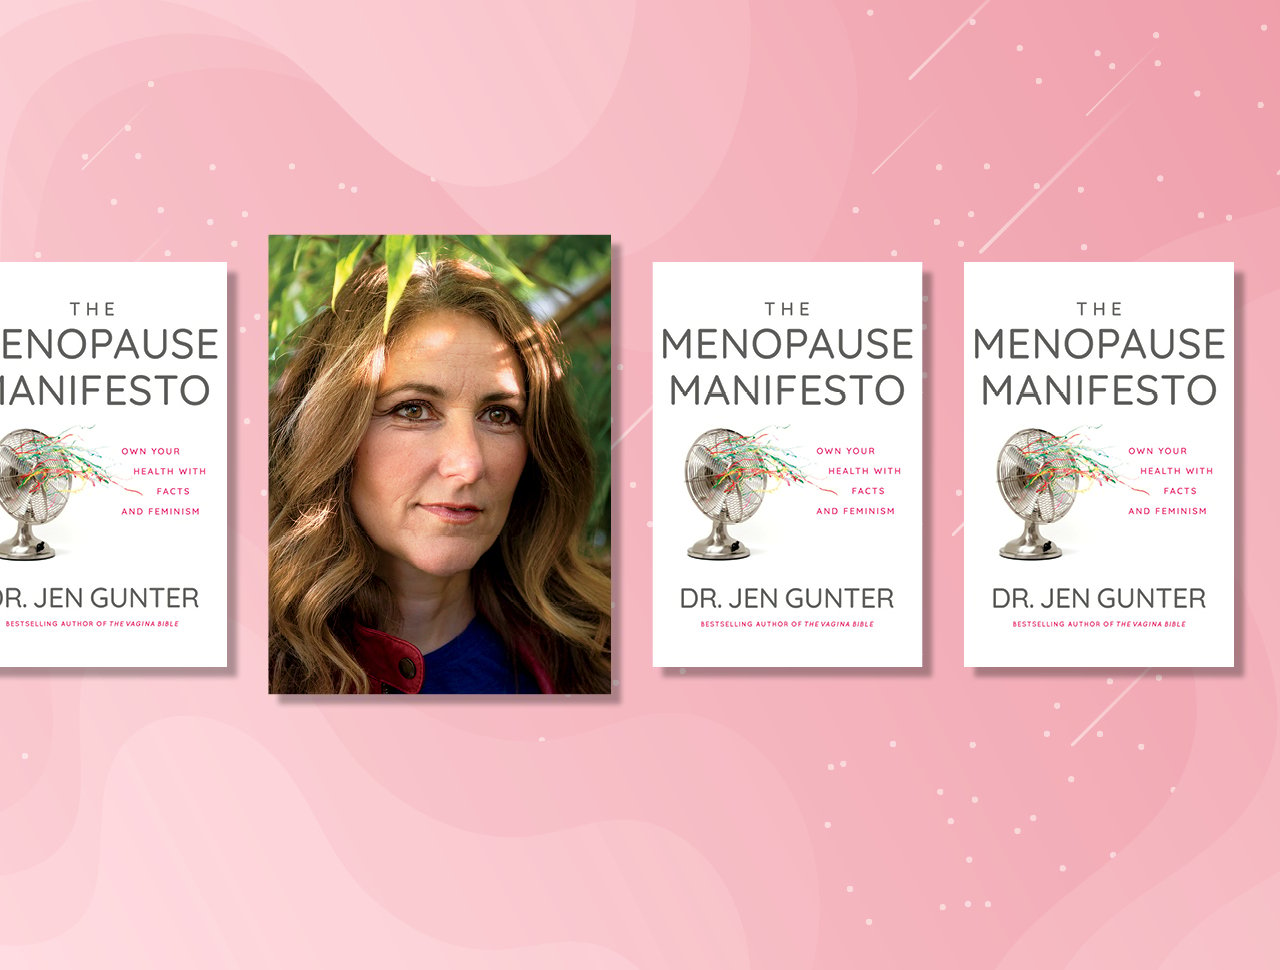 The Menopause Manifesto by Dr. Jen Gunter